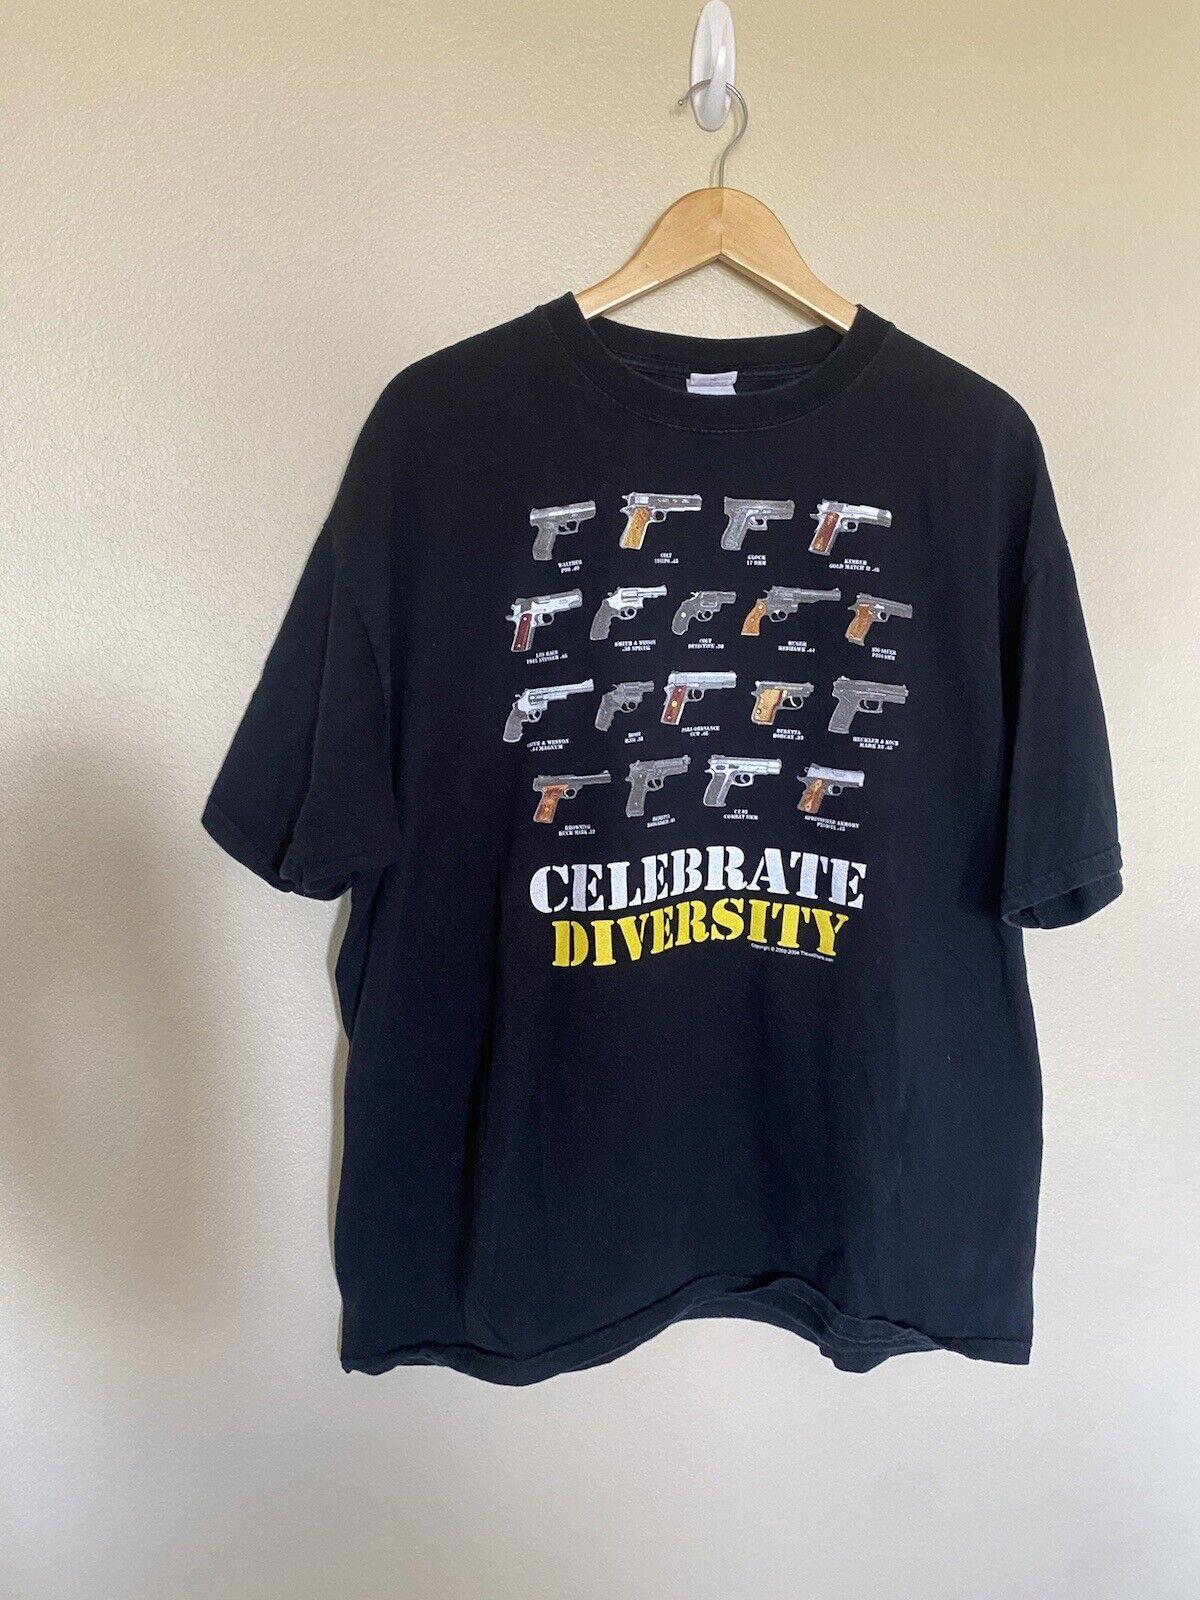 Diversity T shirt.jpg